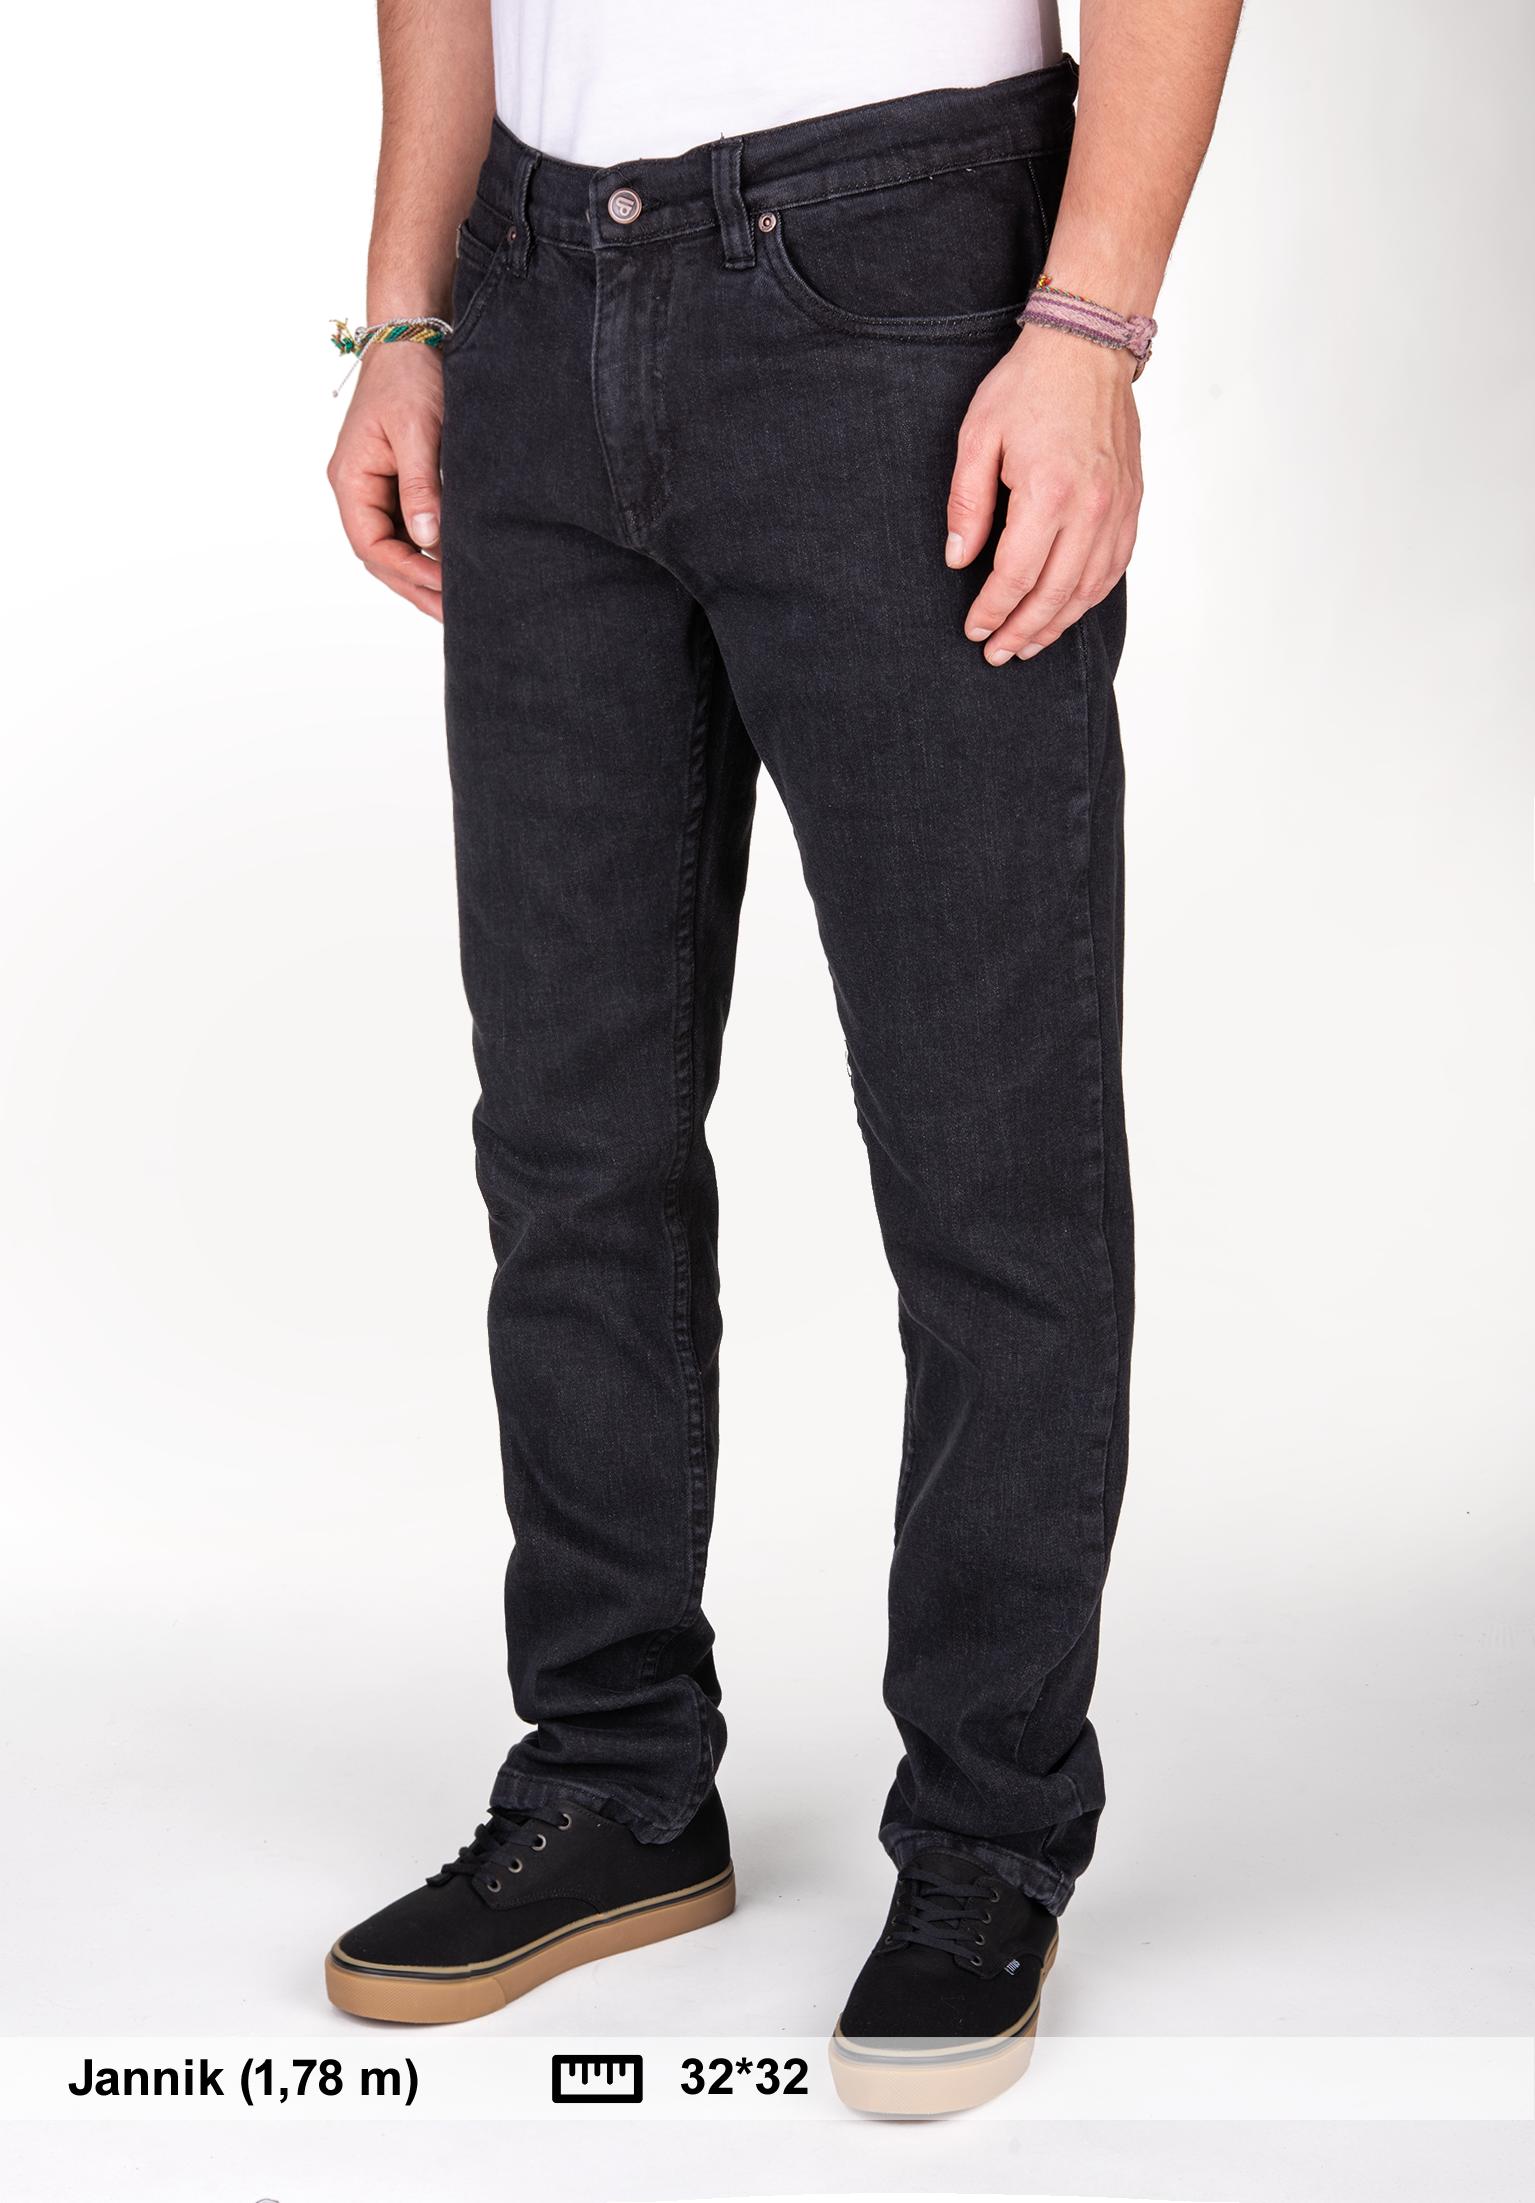 titus-jeans-taper-fit-black-vintage-vorderansicht-0540982.jpg